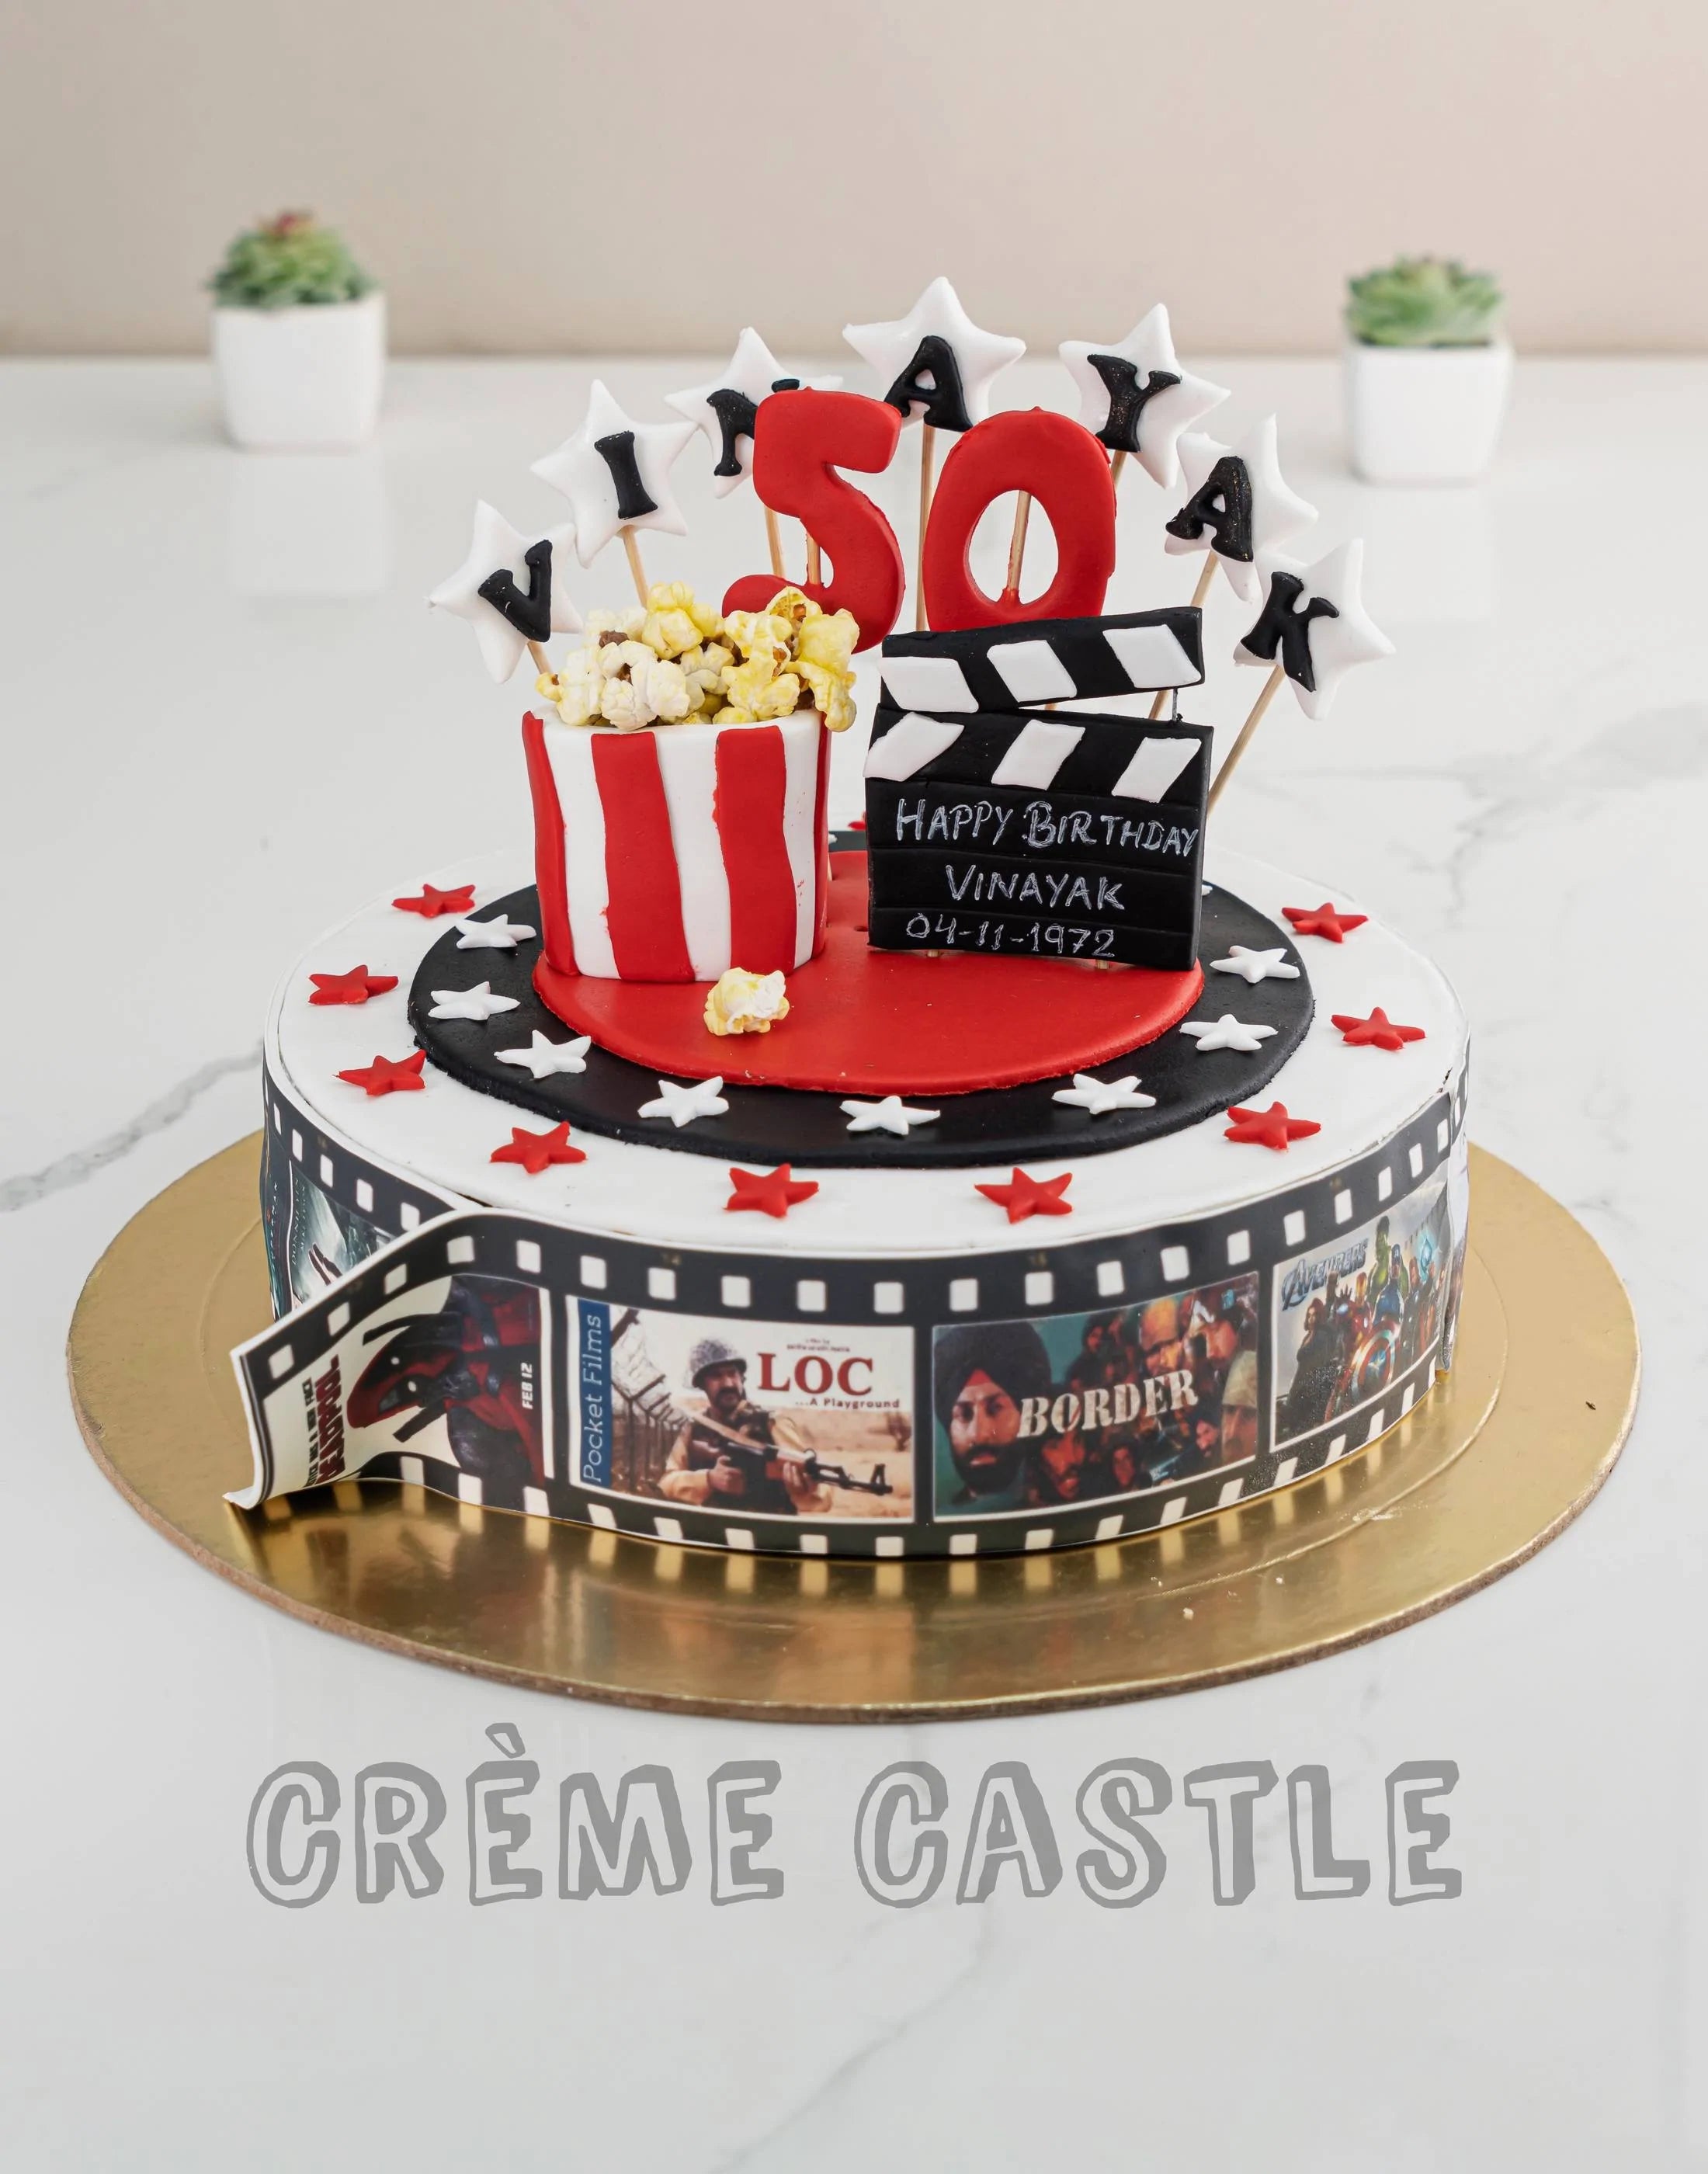 Wedding Cake with a Bride & Groom Chocolate Topper | Bakersfun